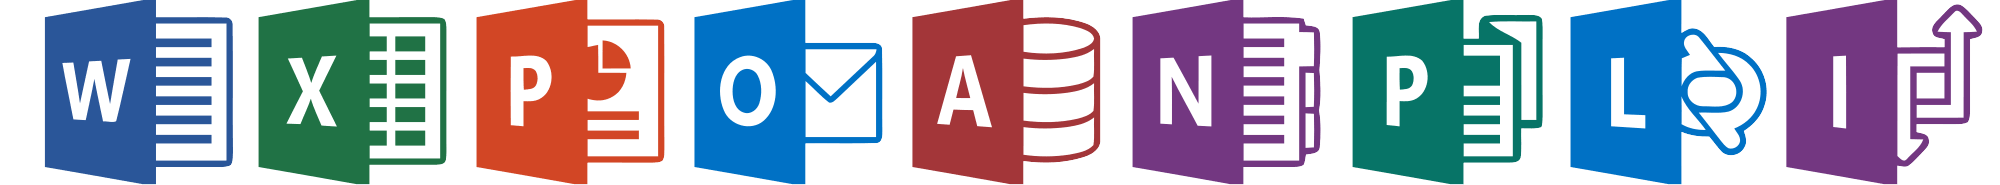 Microsoft 2013 Office 365 Logo - File:Microsoft Office 2013 logos lineup.svg - Wikimedia Commons